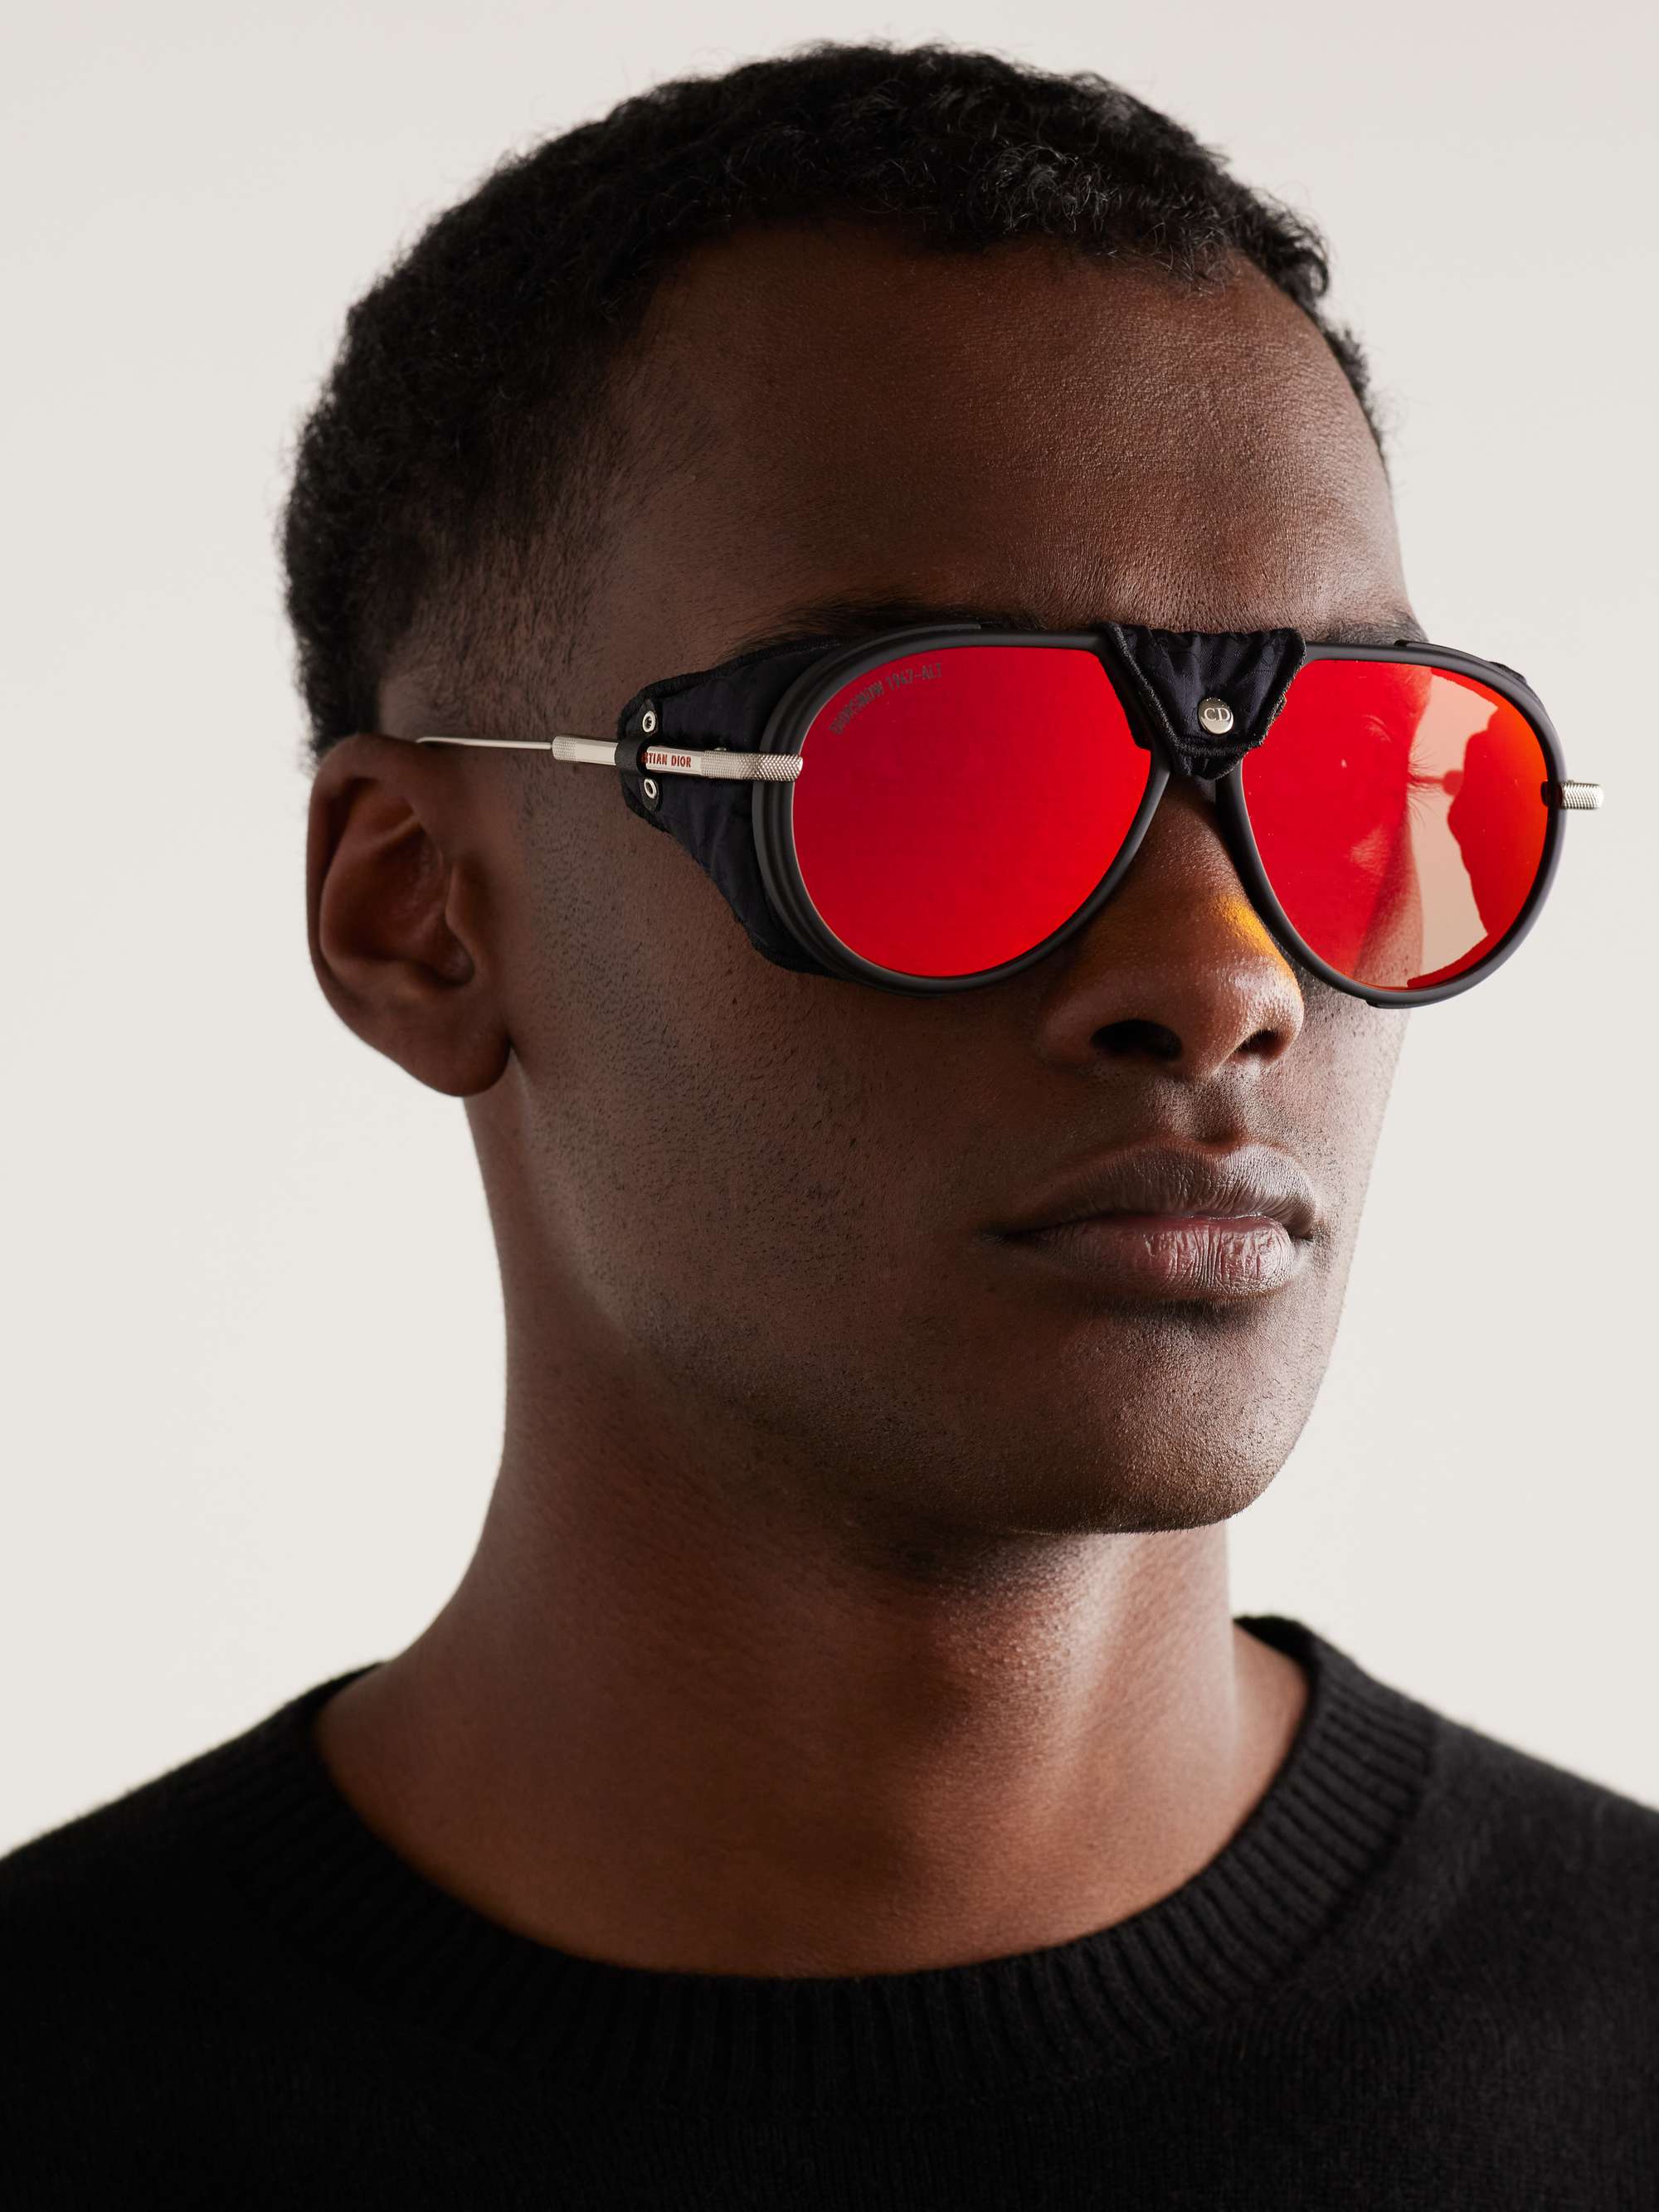 Tổng hợp 73+ về red dior sunglasses - Du học Akina